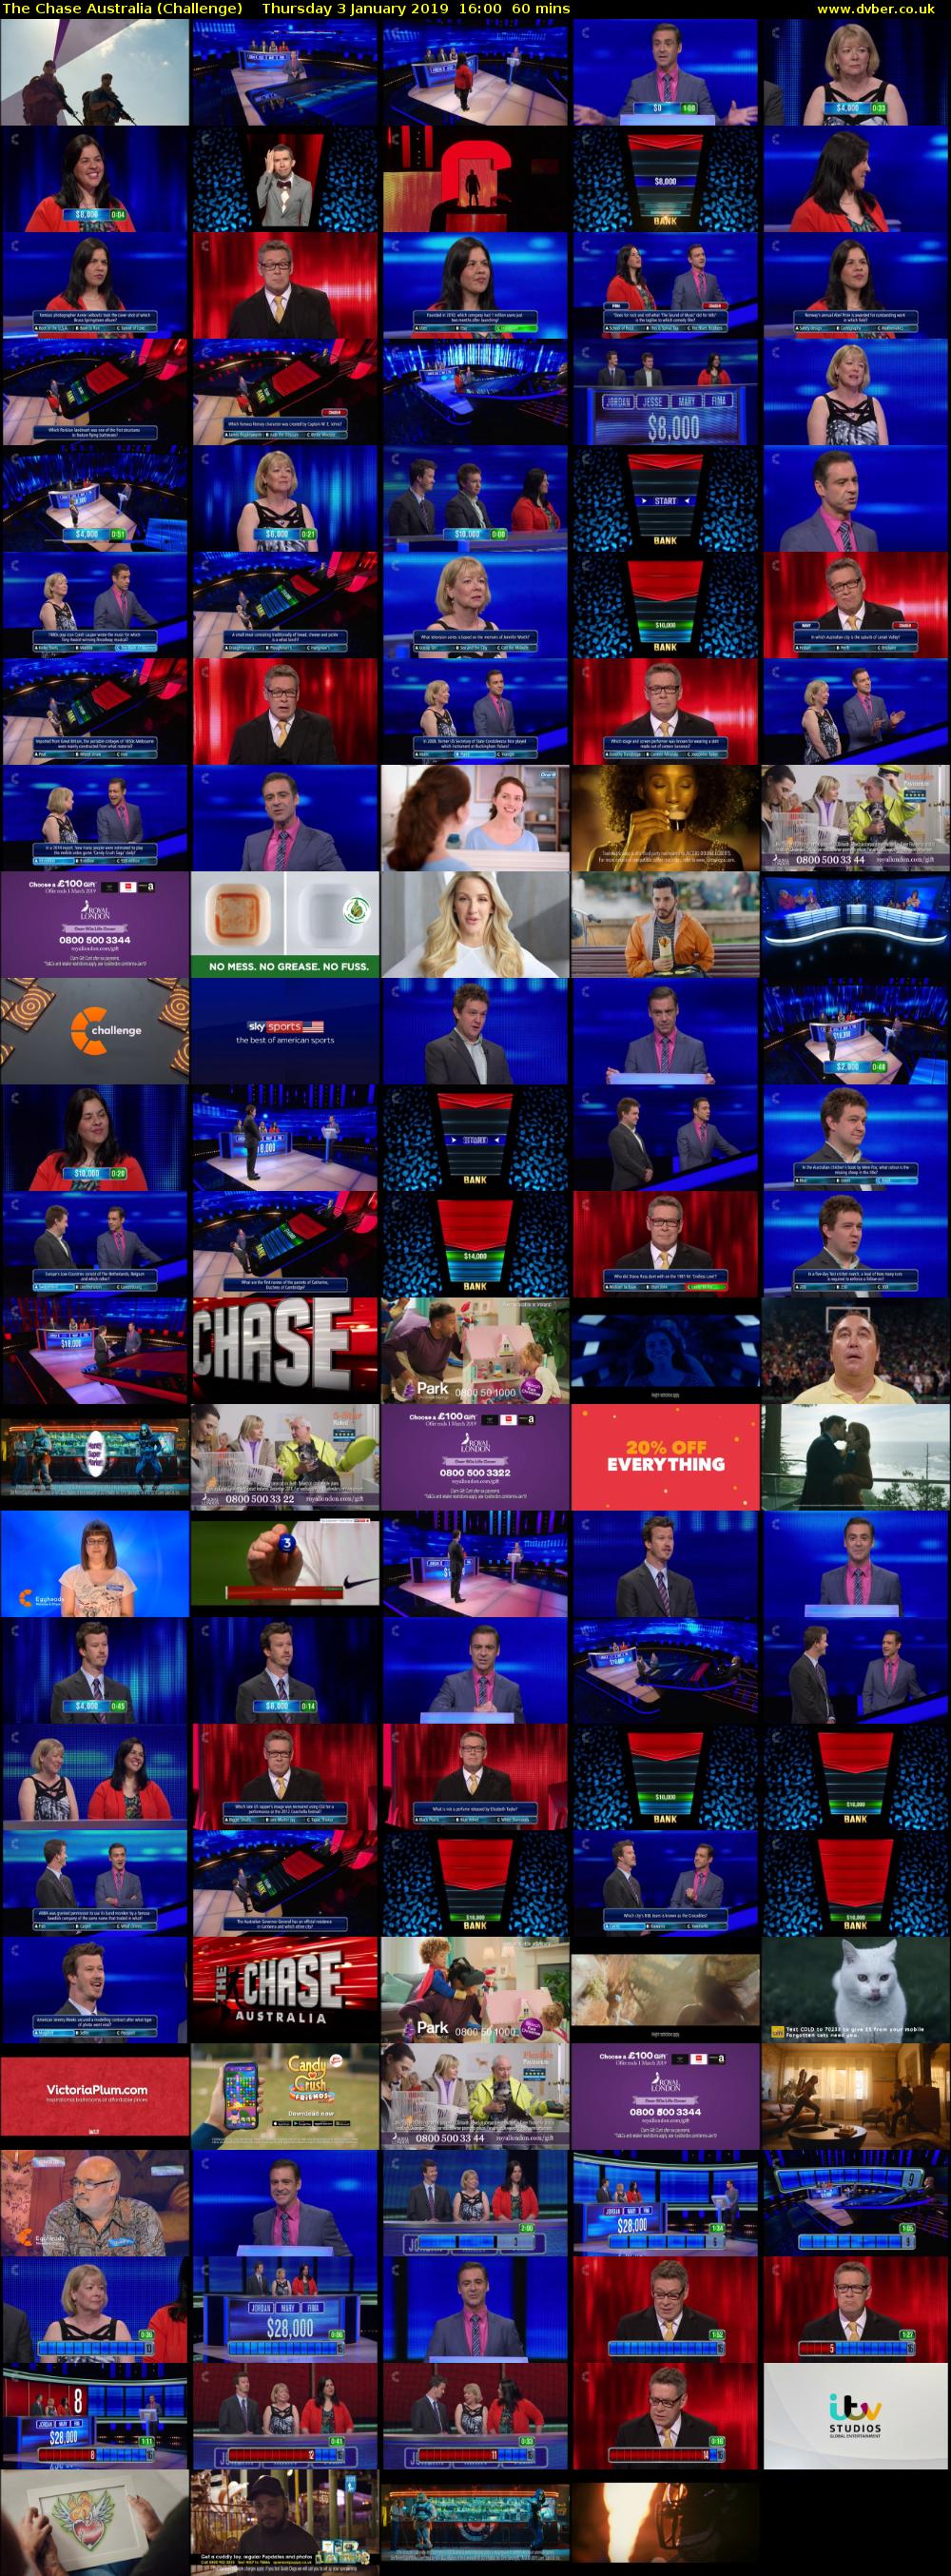 The Chase Australia (Challenge) Thursday 3 January 2019 16:00 - 17:00